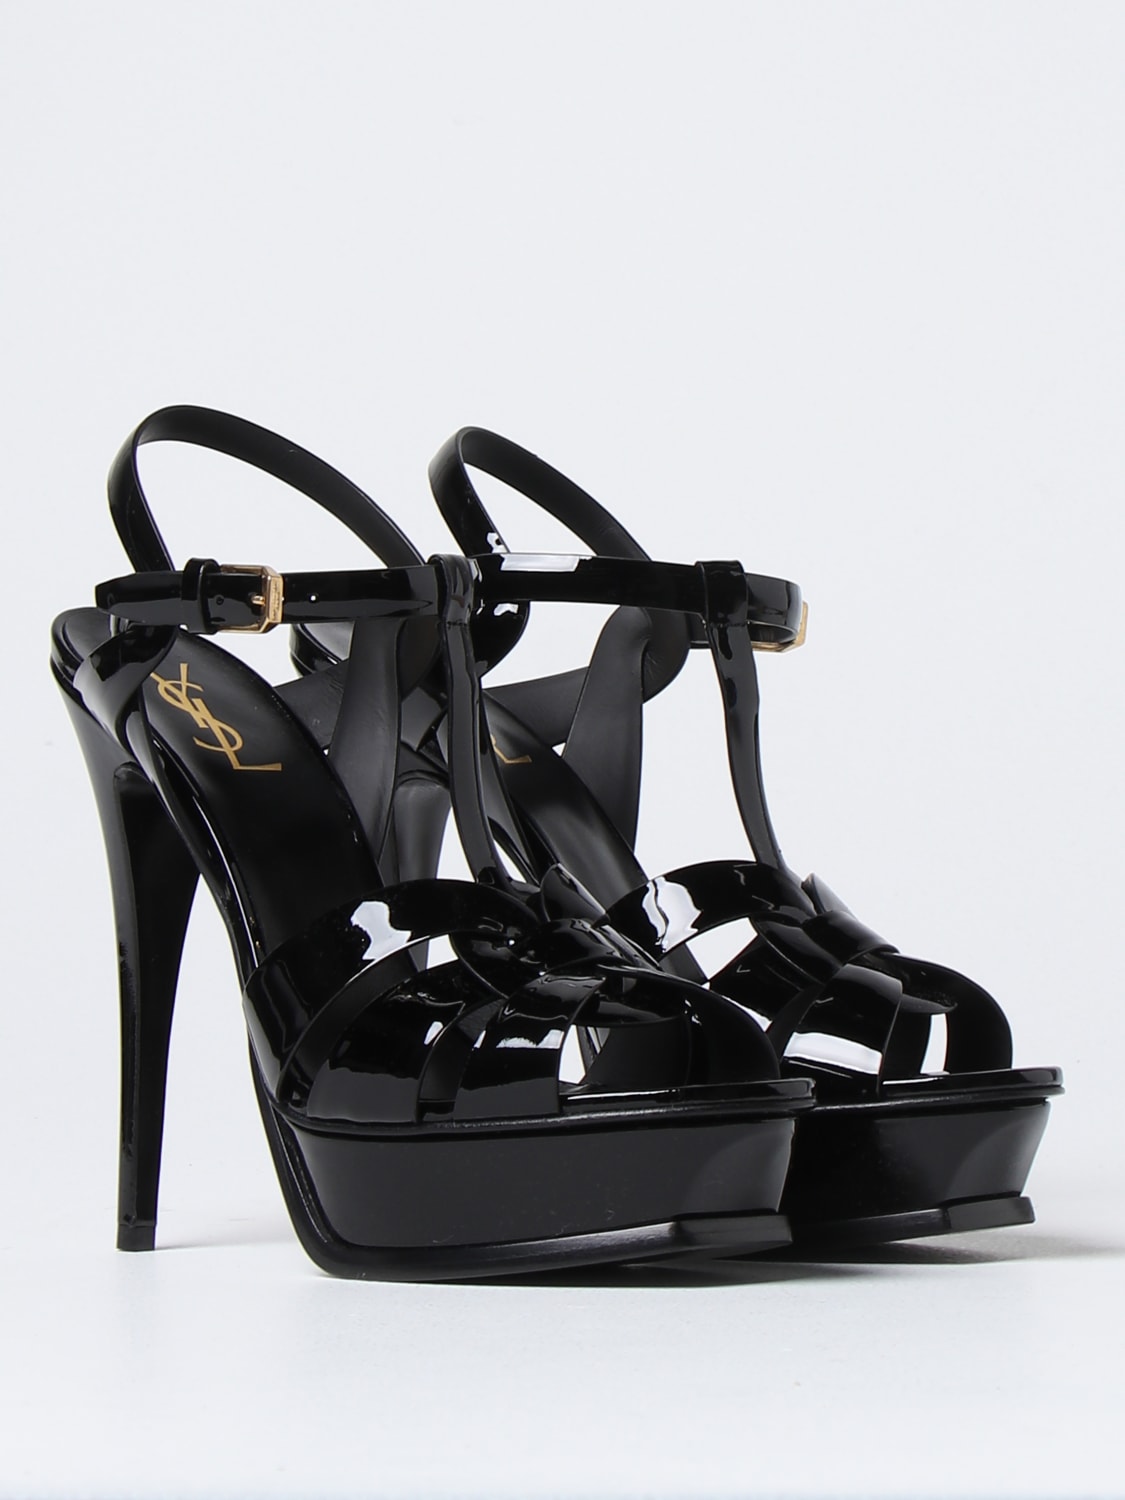 Yves Saint Laurent Black Patent Leather Open Toe Tribute Too Heels